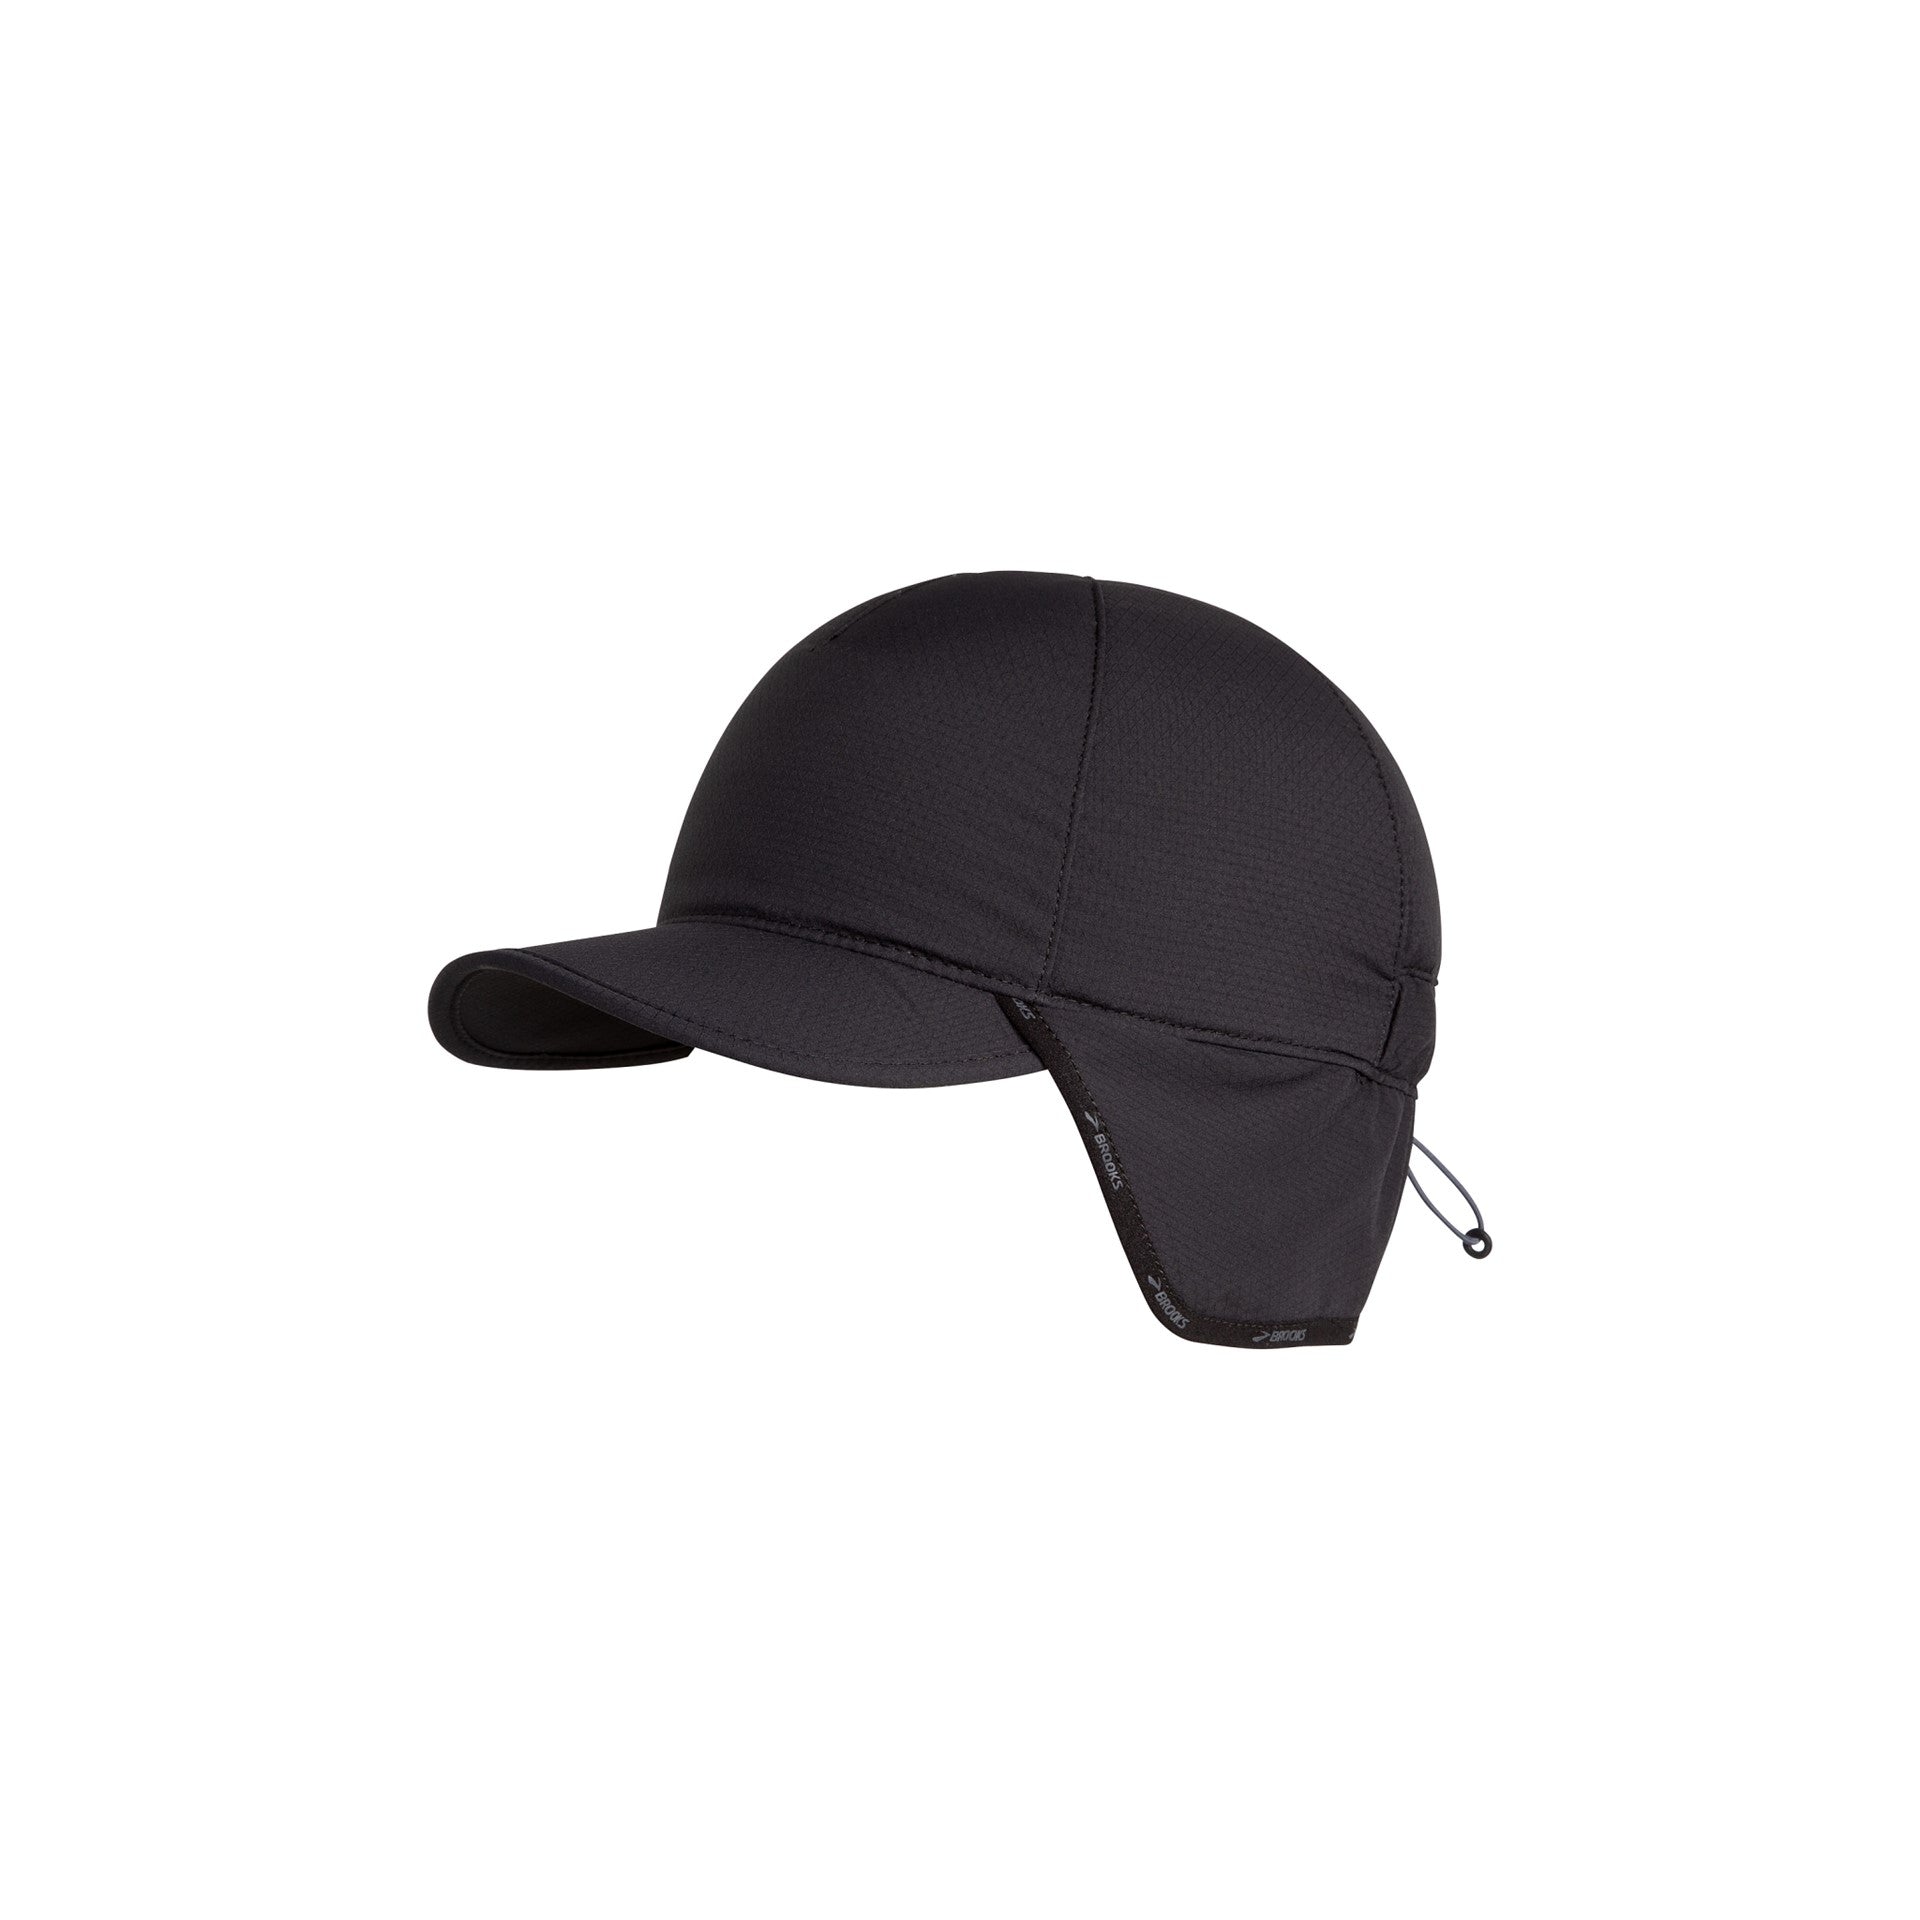 Hybrid Performance Hat - Black